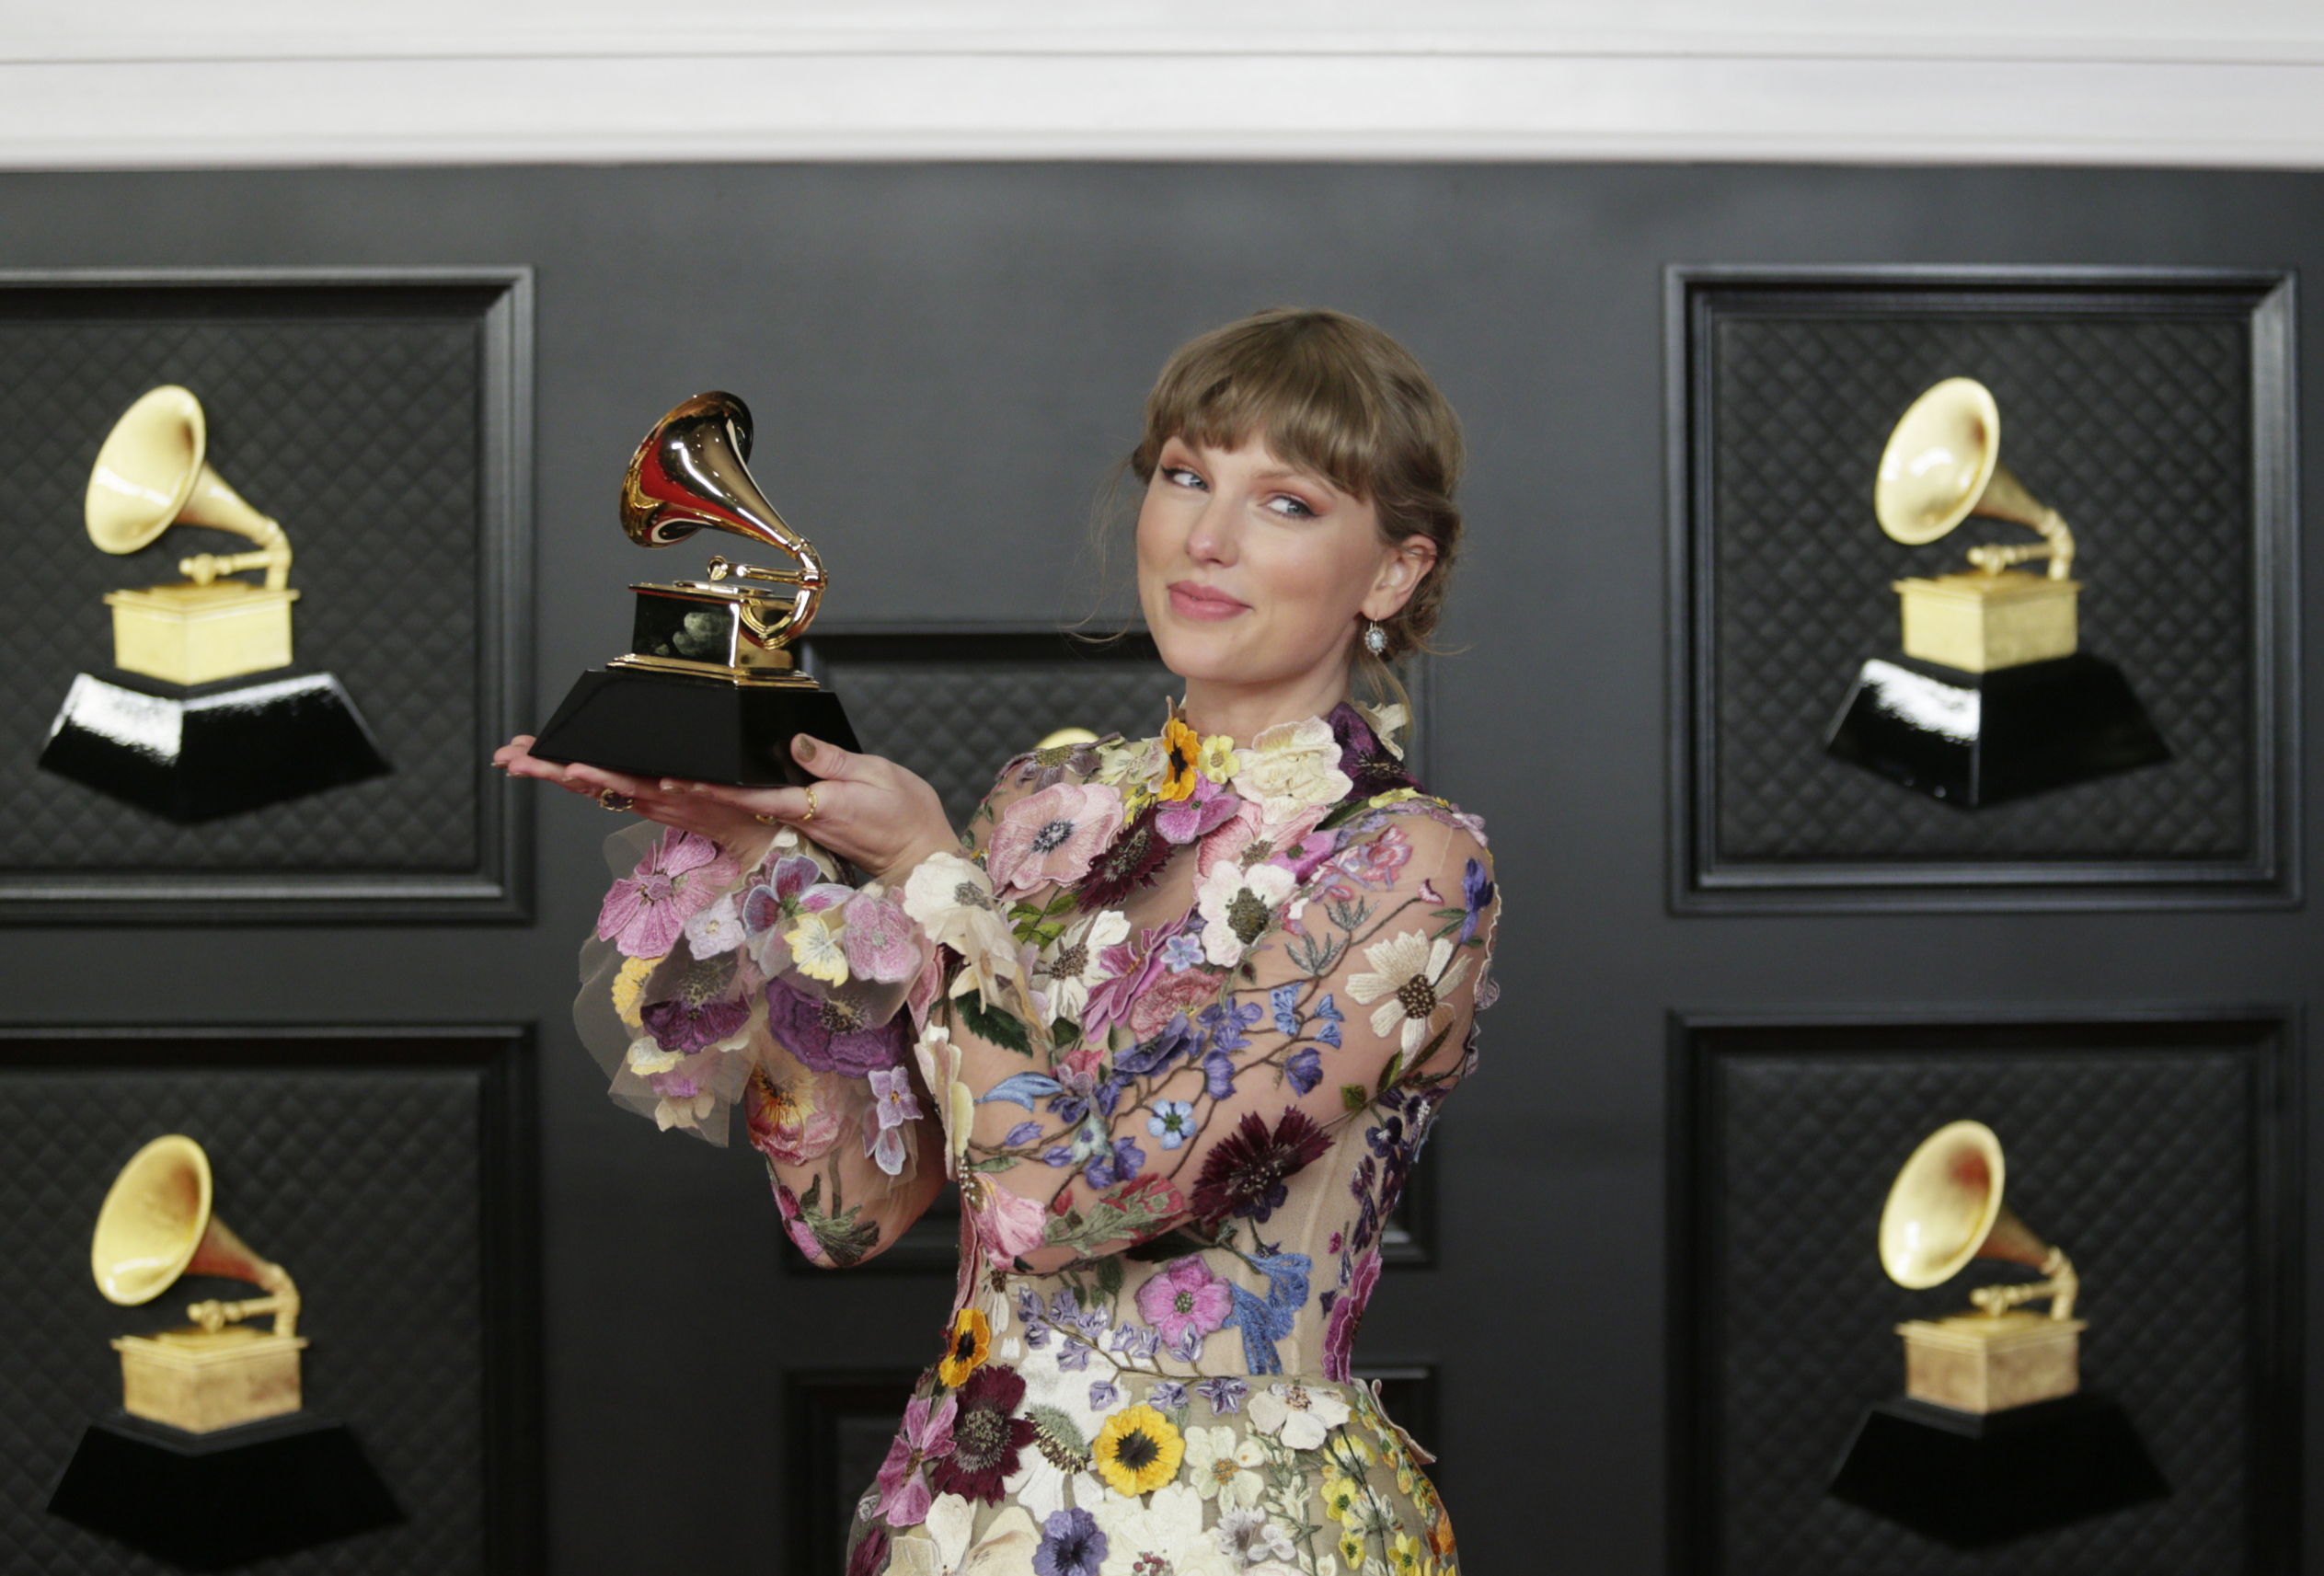 Taylor holding a Grammy